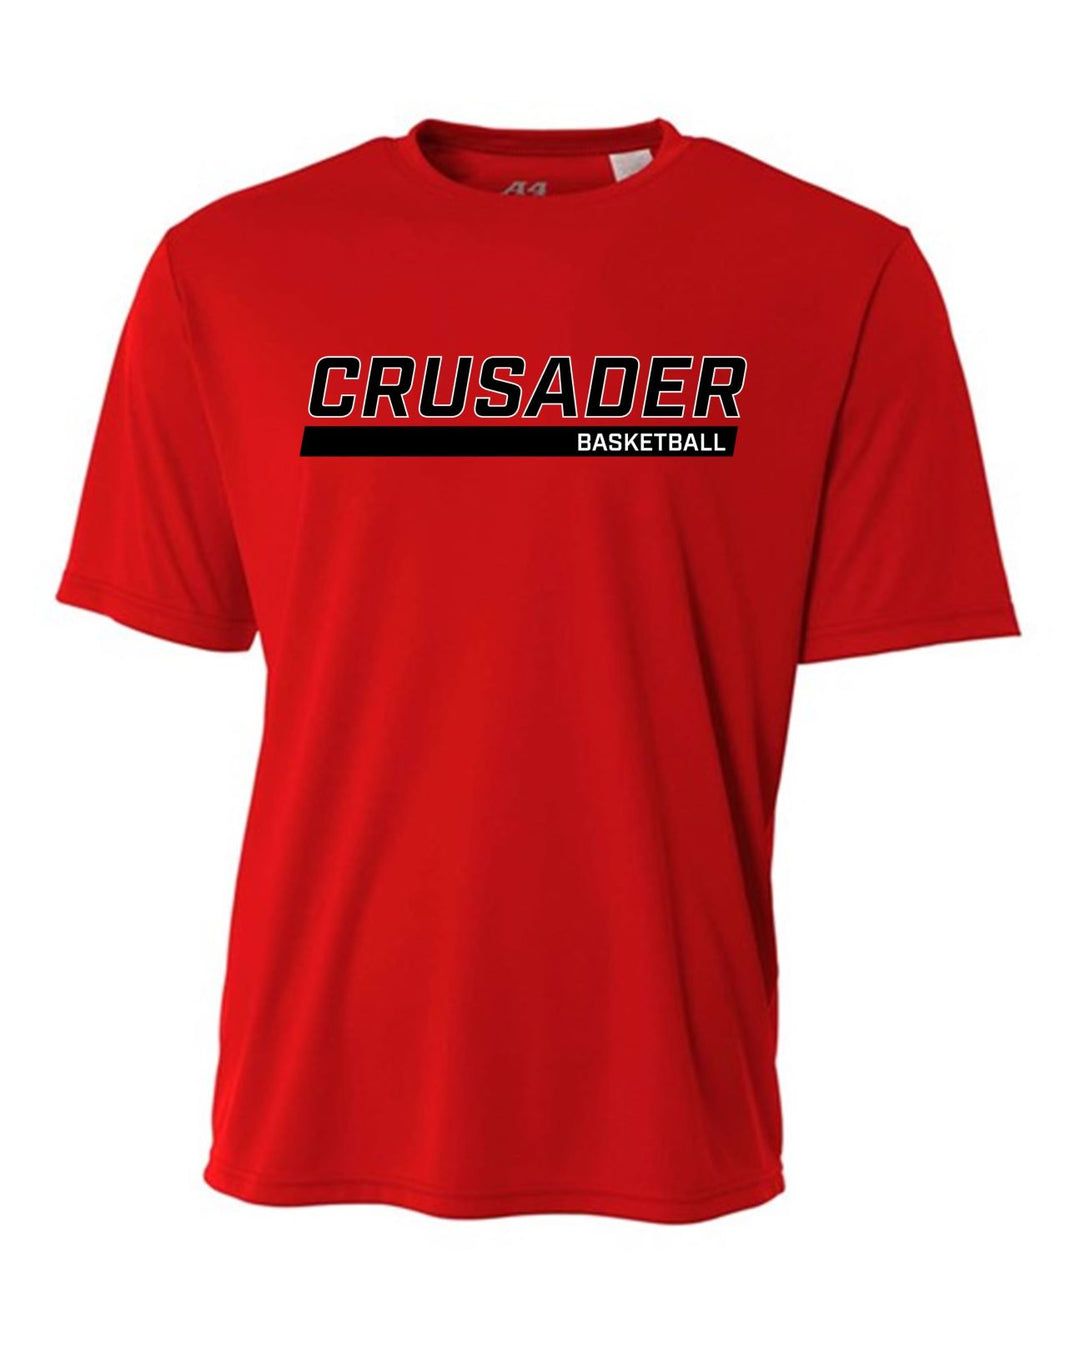 WCU Basketball Men's Short-Sleeve Performance Shirt WCU Basketball Red CRUSADER - Third Coast Soccer